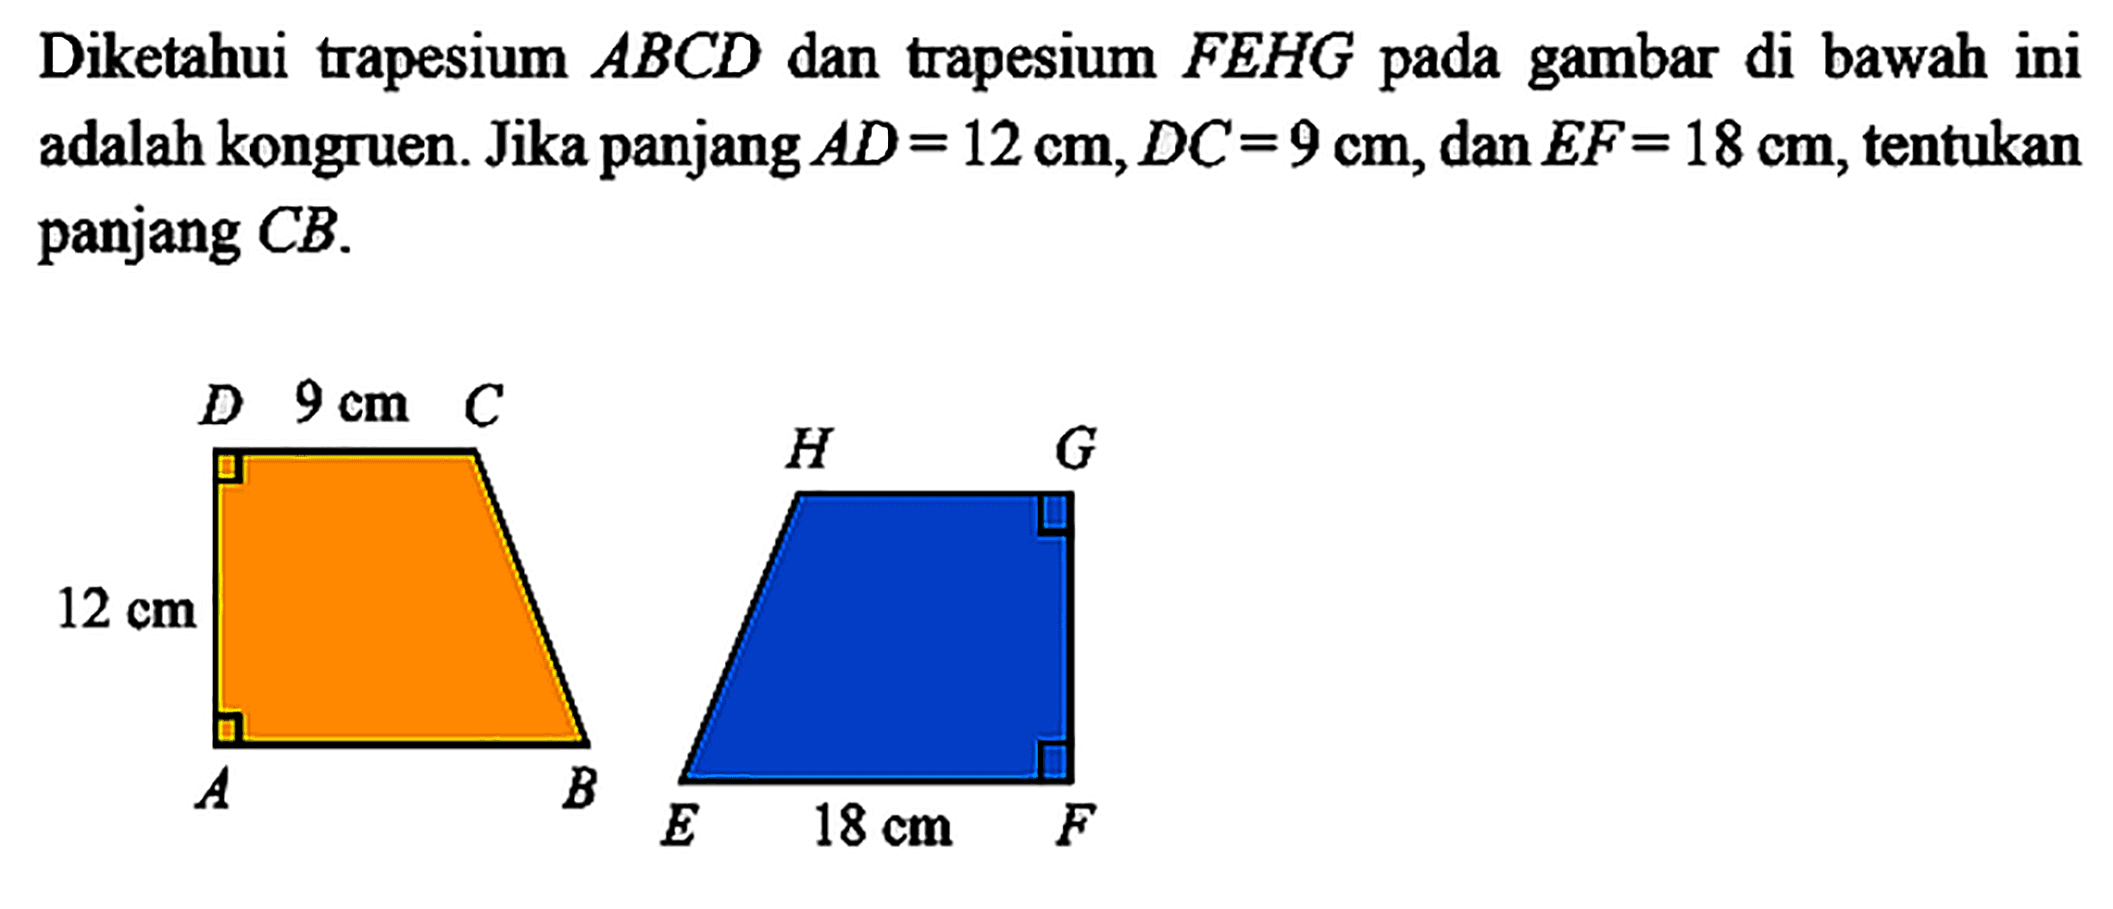 Diketahui trapesium  ABCD  dan trapesium  FEHG  pada gambar di bawahini adalah kongruen. Jika panjang  A D=12 cm, D C=9 cm , dan  E F=18 cm , tentukan panjang  C B .